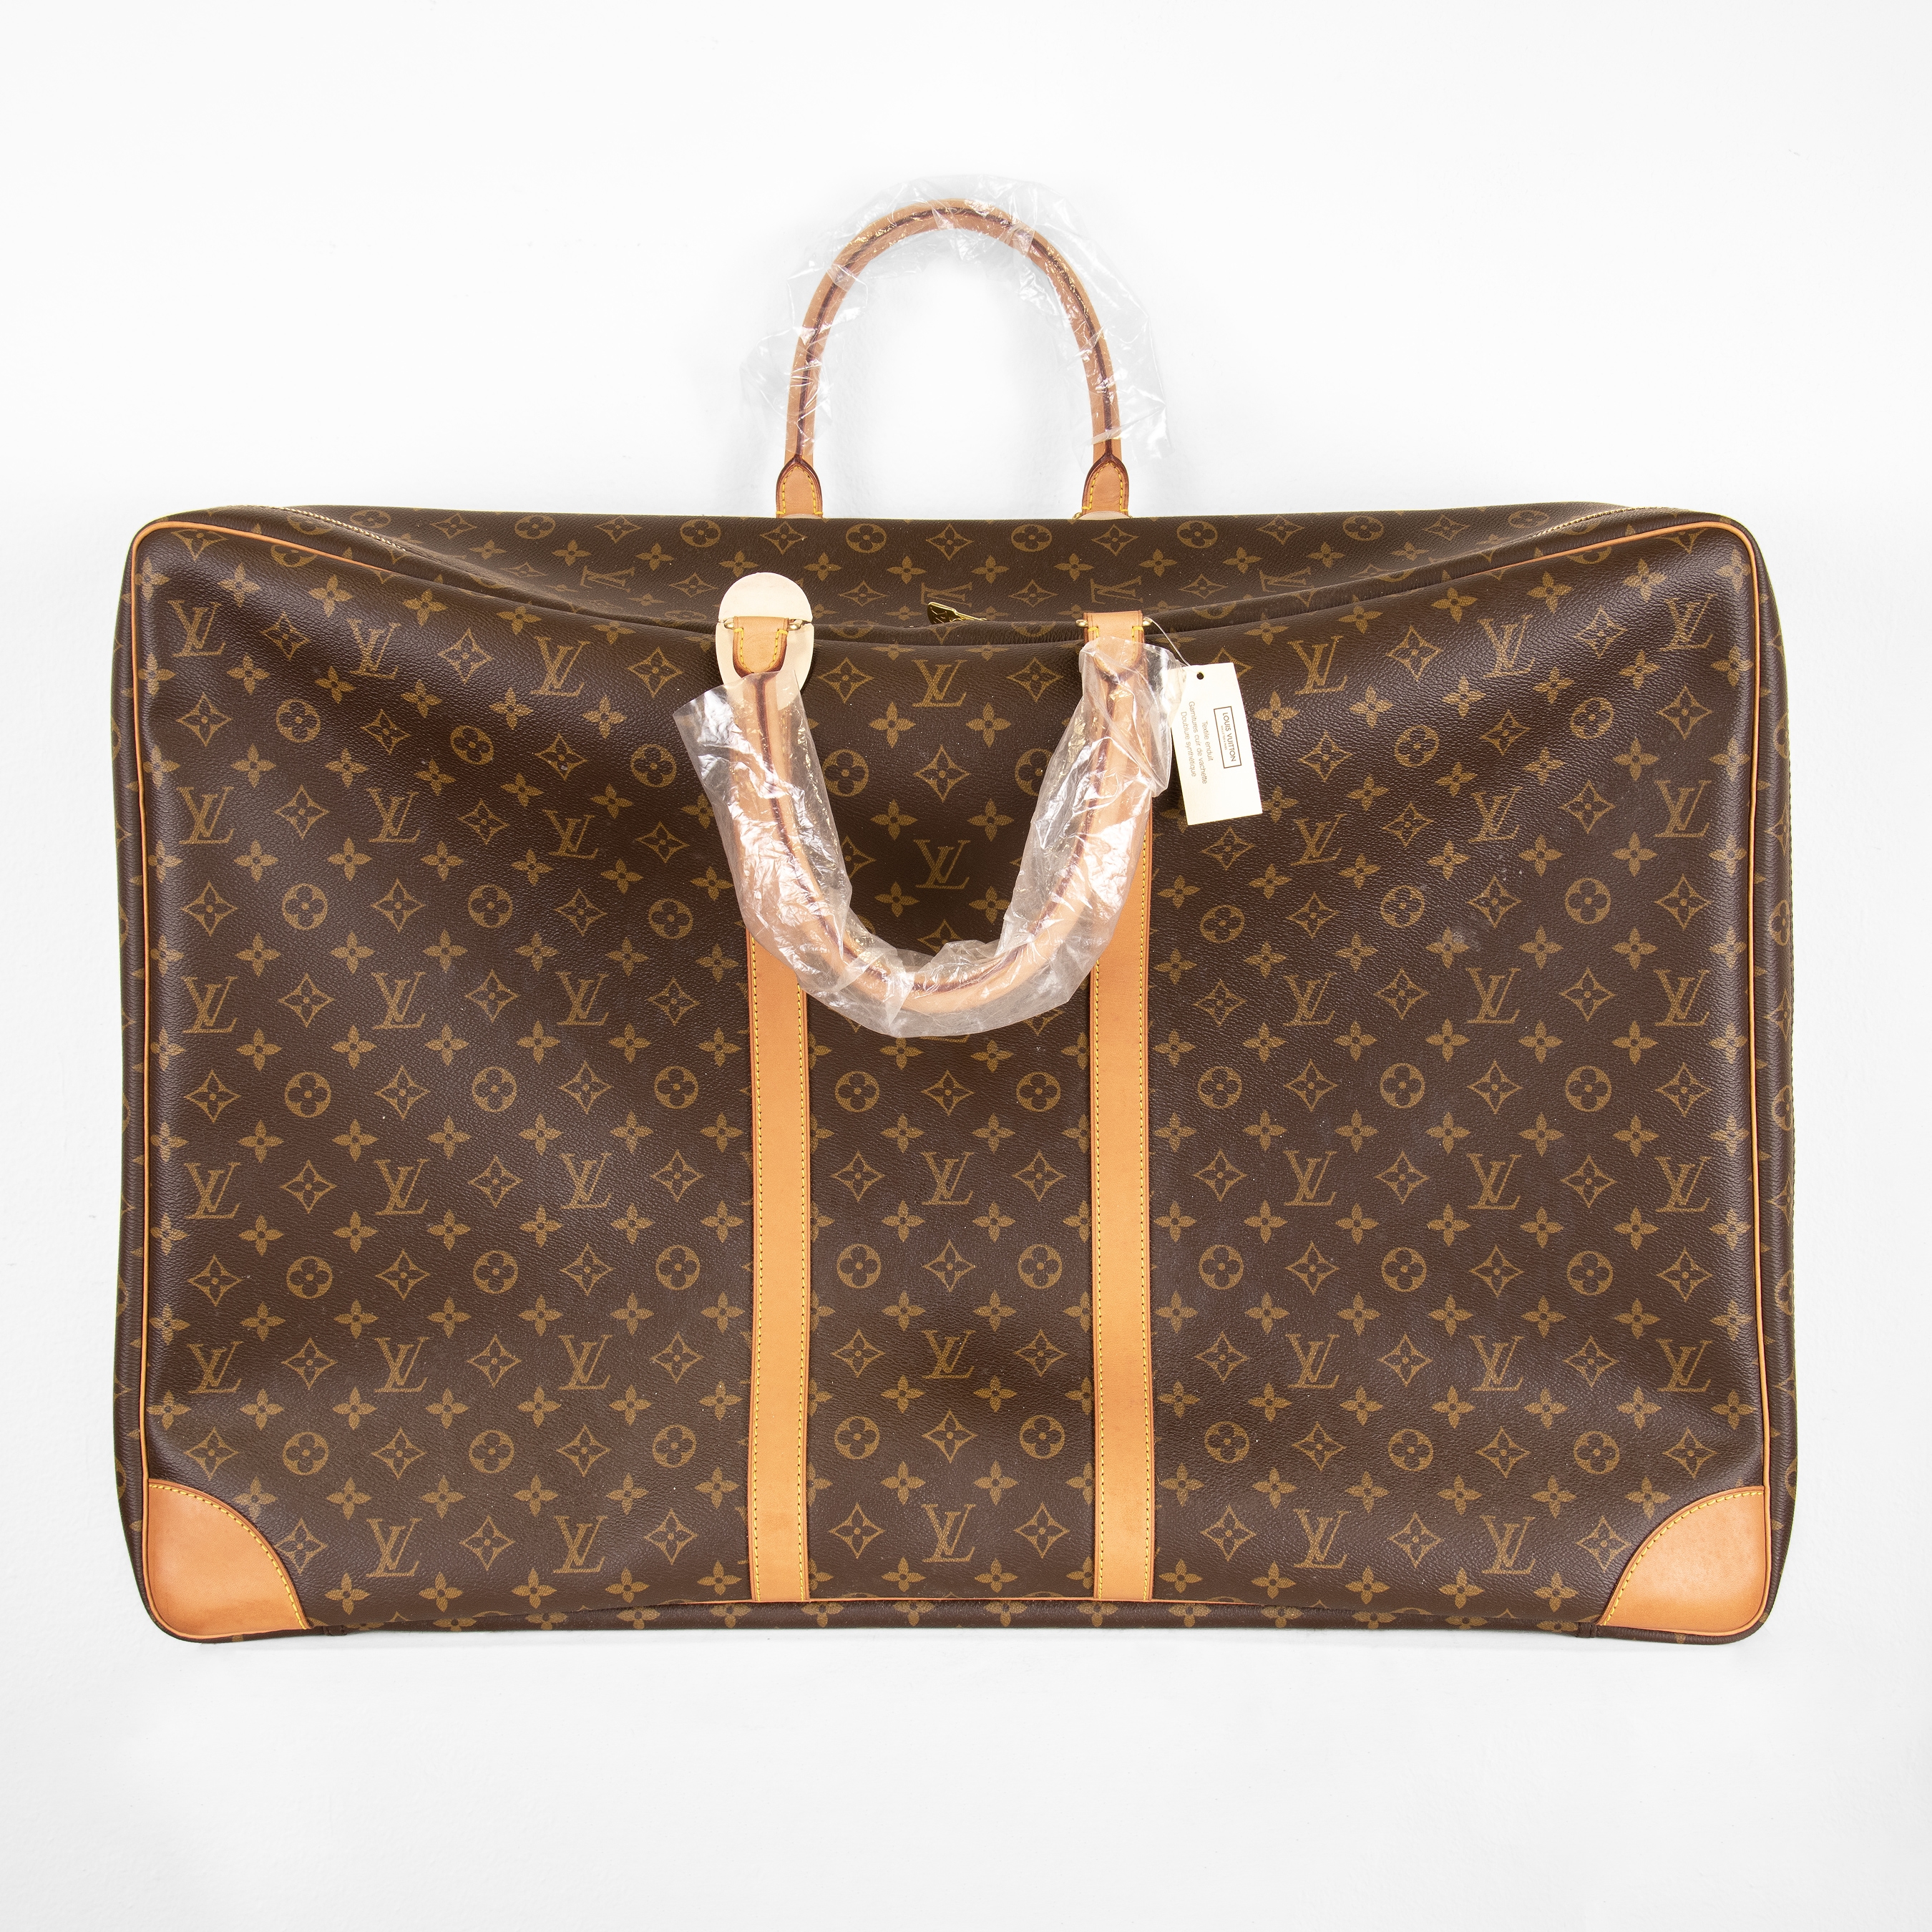 Sold at Auction: Louis Vuitton Monogram Sirius 55 Bag